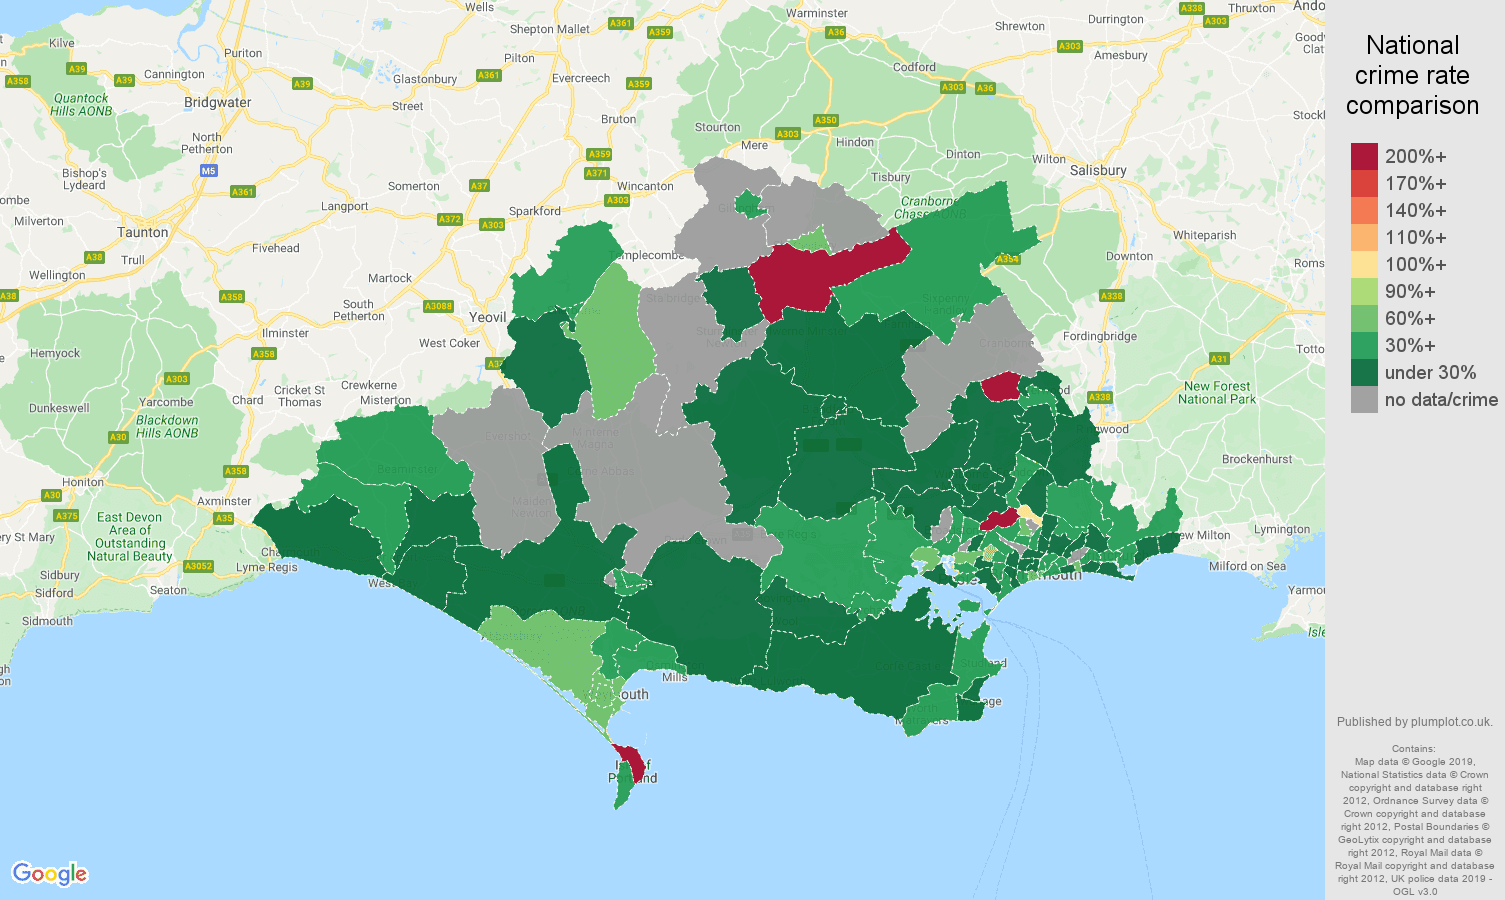 Dorset other crime rate comparison map